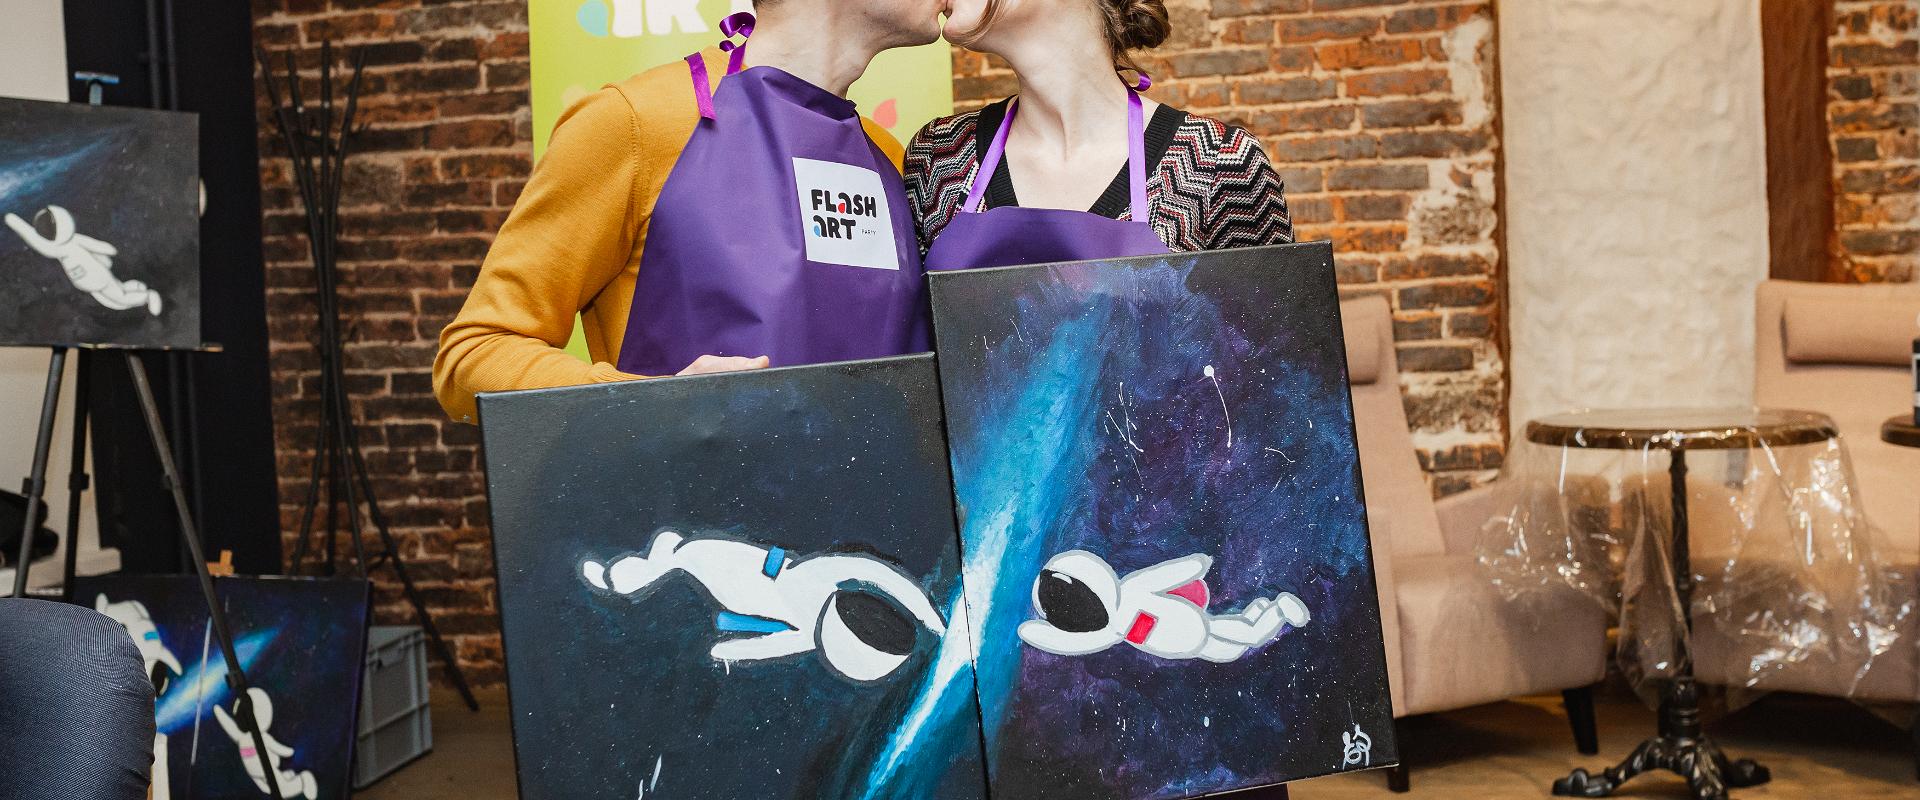 Flash Art – die ersten Kunstfeste in Tallinn!